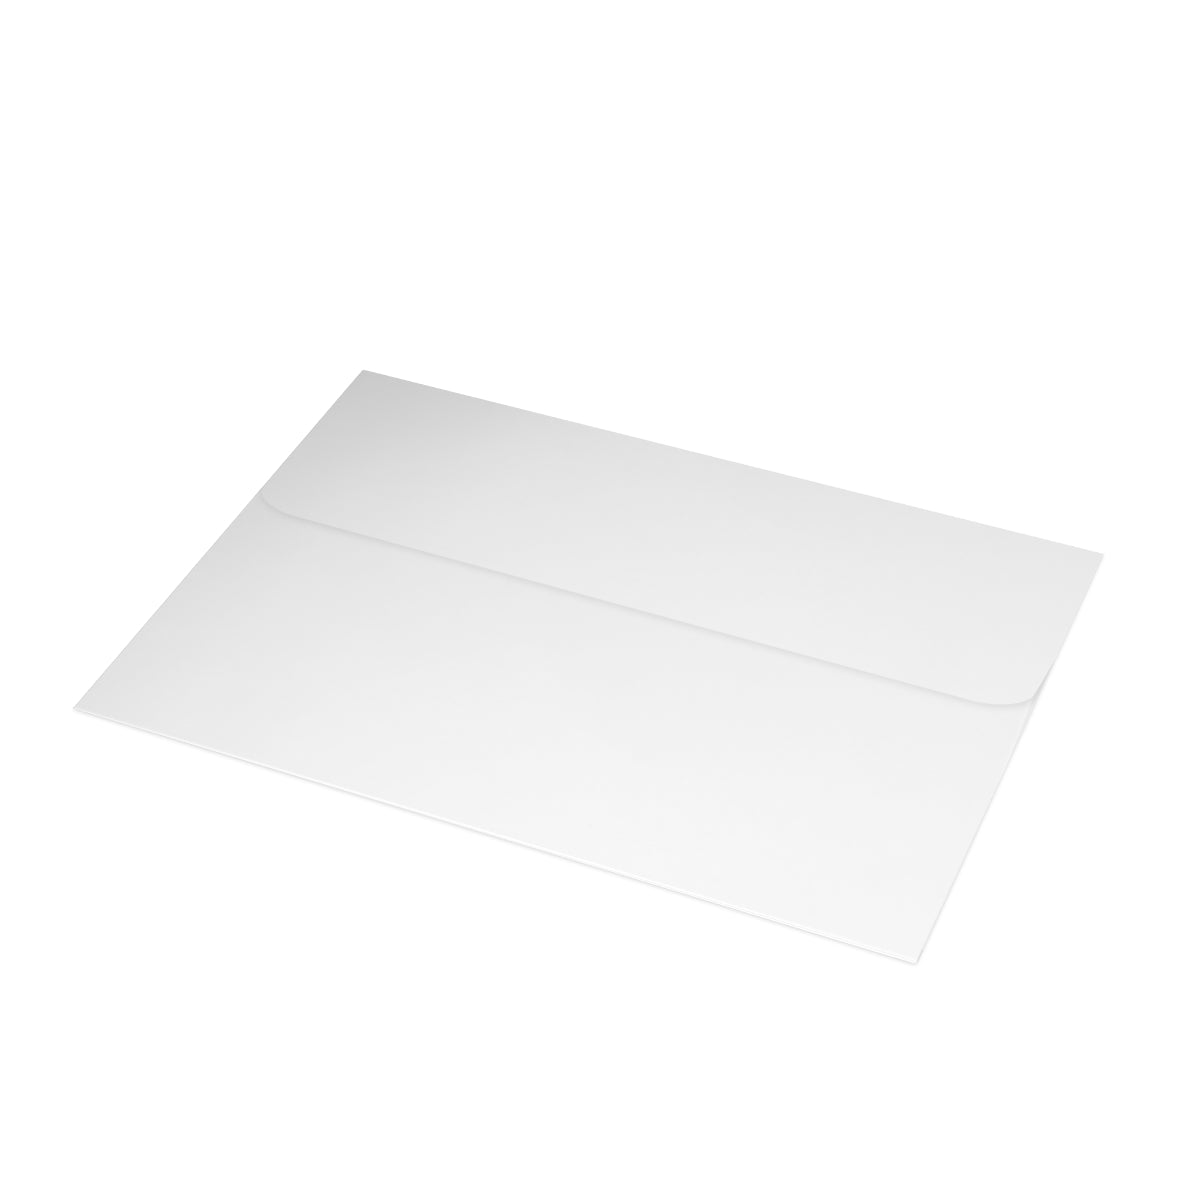 Newport Folded Matte Notecards + Envelopes (10pcs)